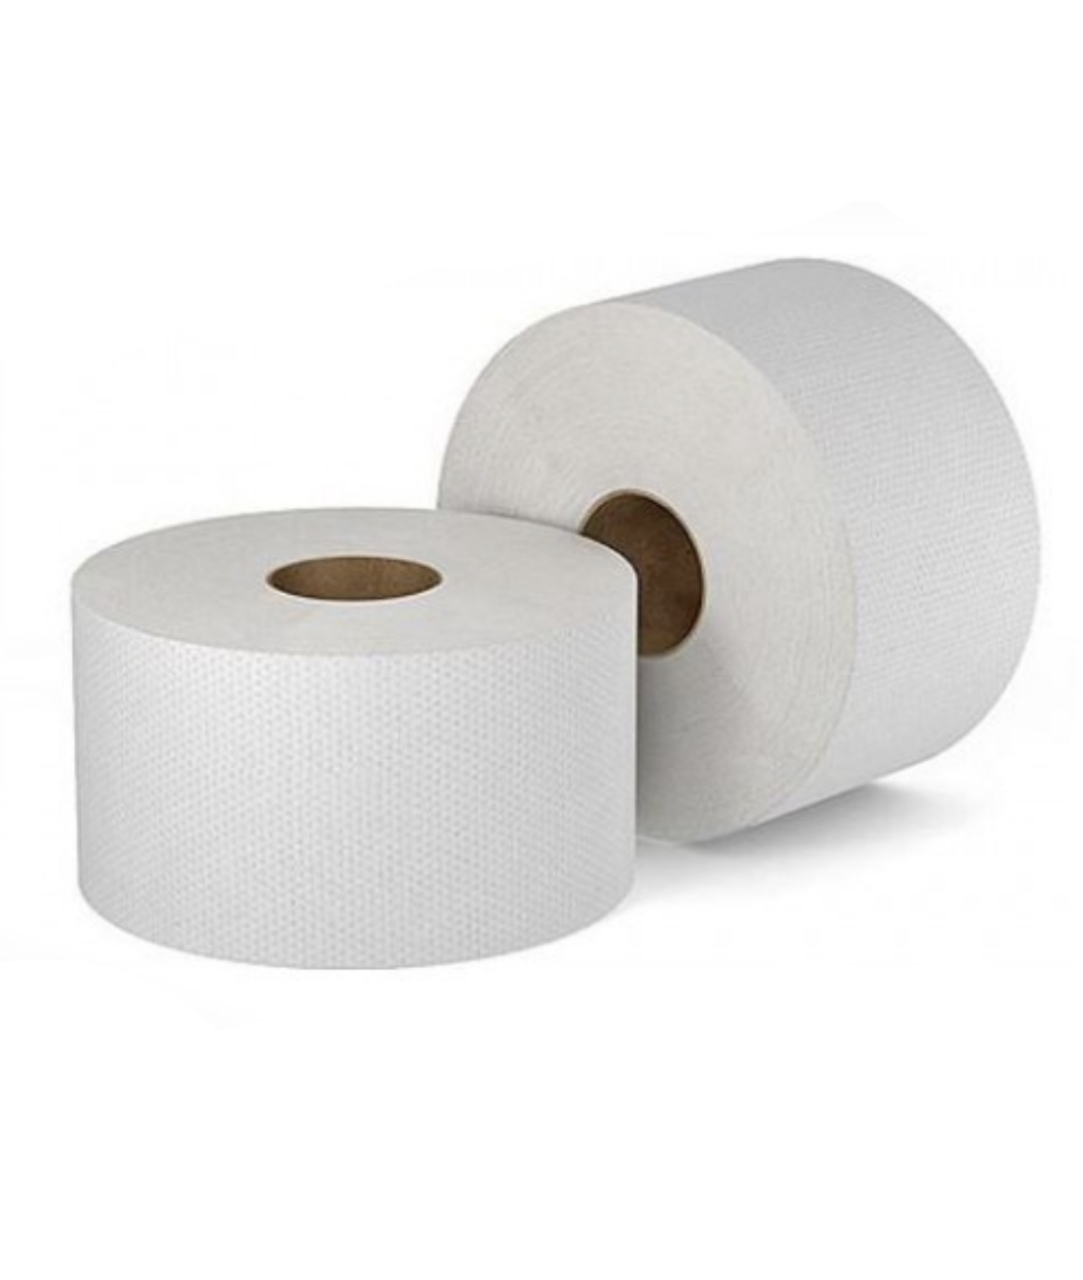 Туалетная бумага Профгигиена Comfort, двухслойная белая .арт. 204